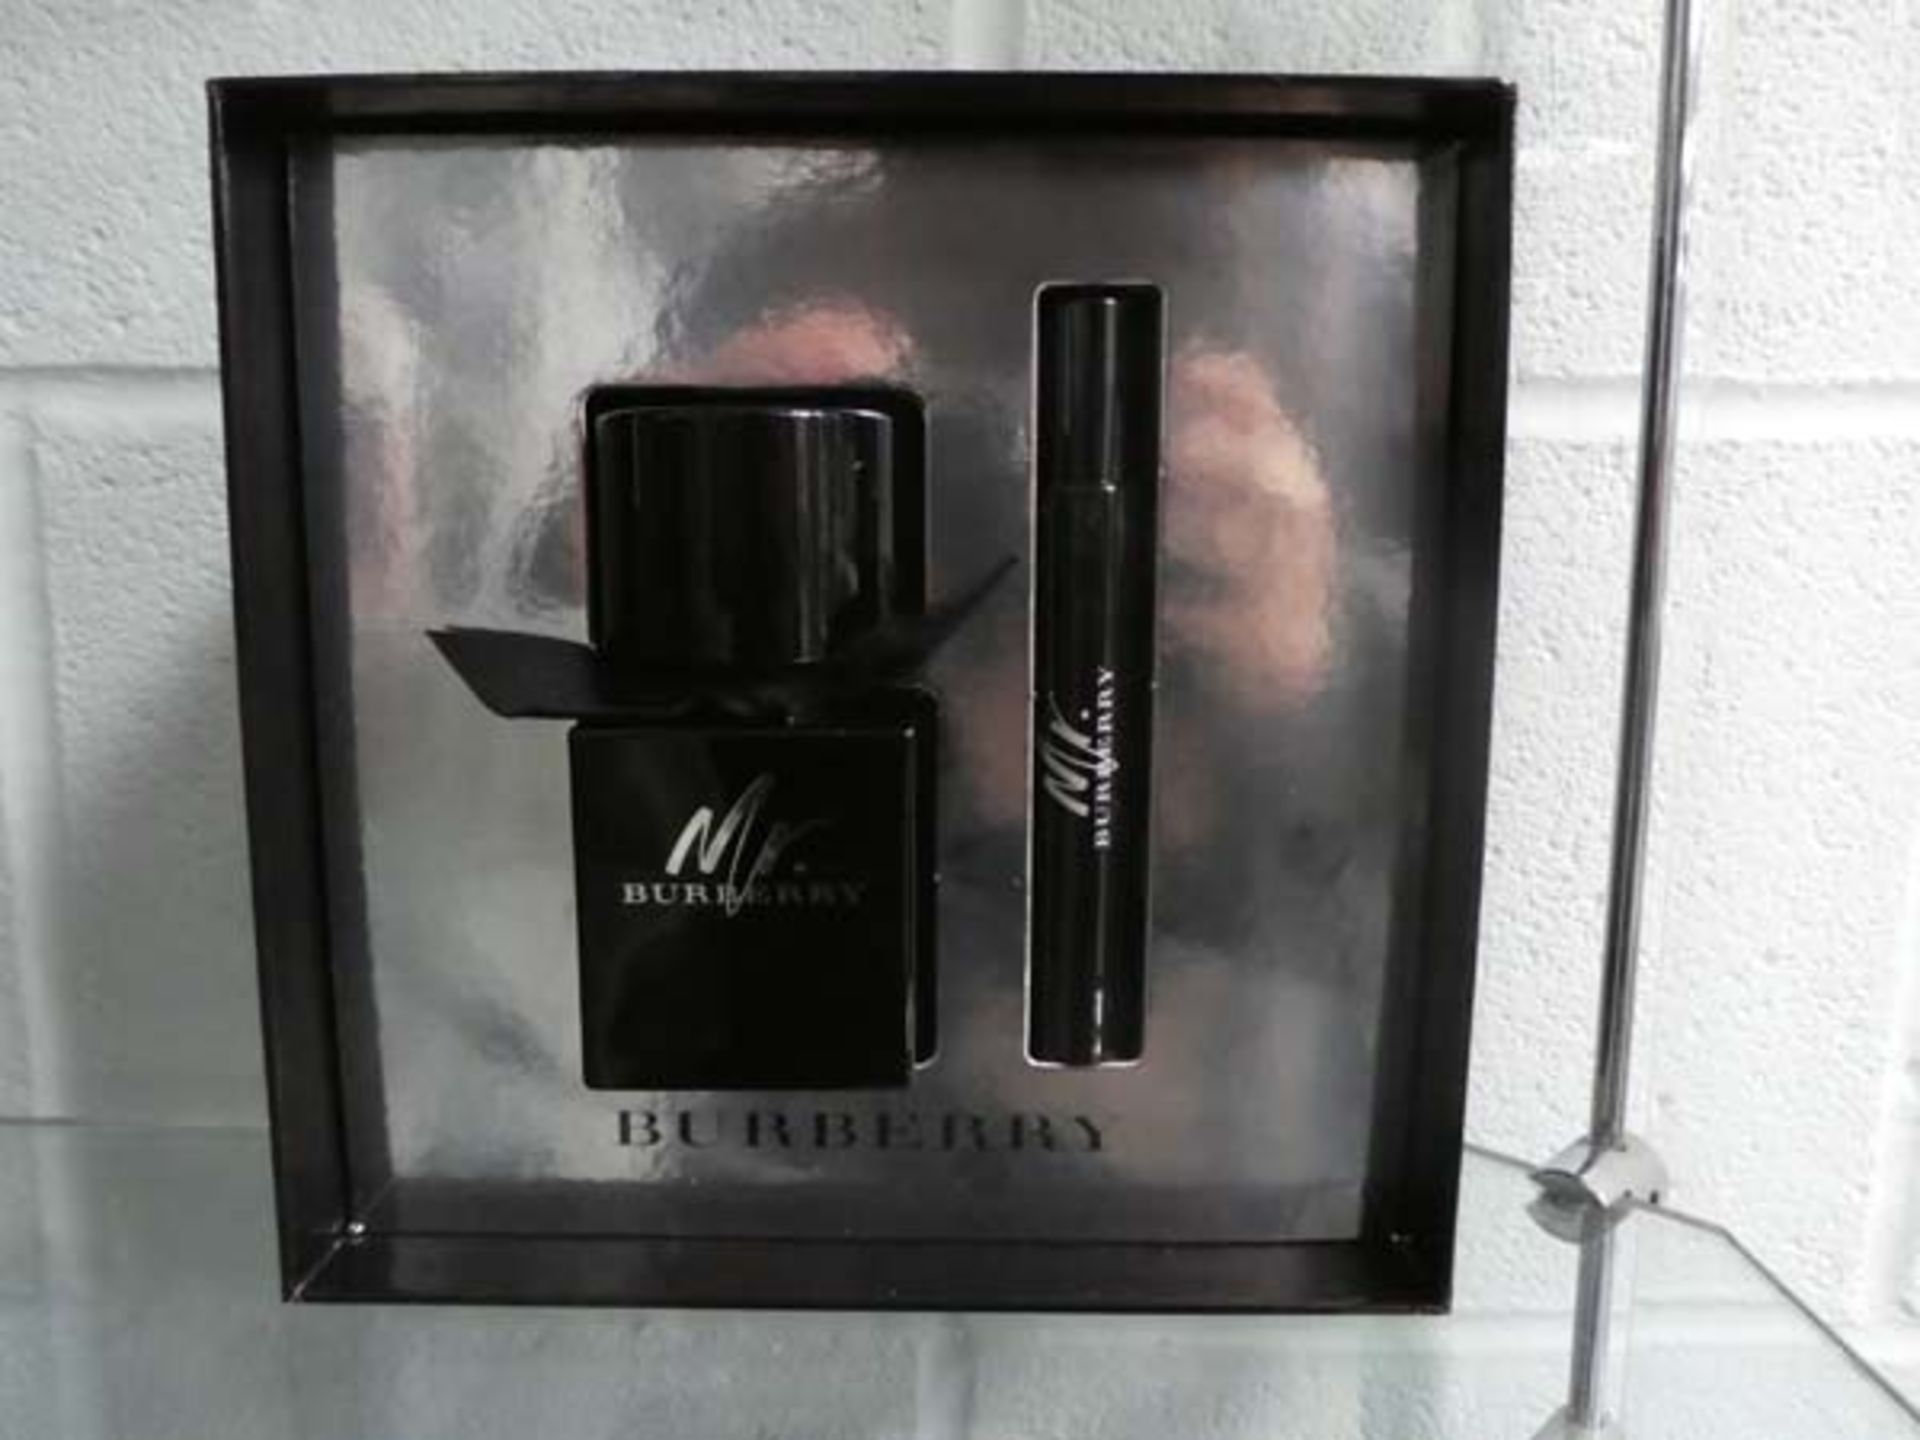 Mr Burberry perfume gift set incl 50ml perfume in box